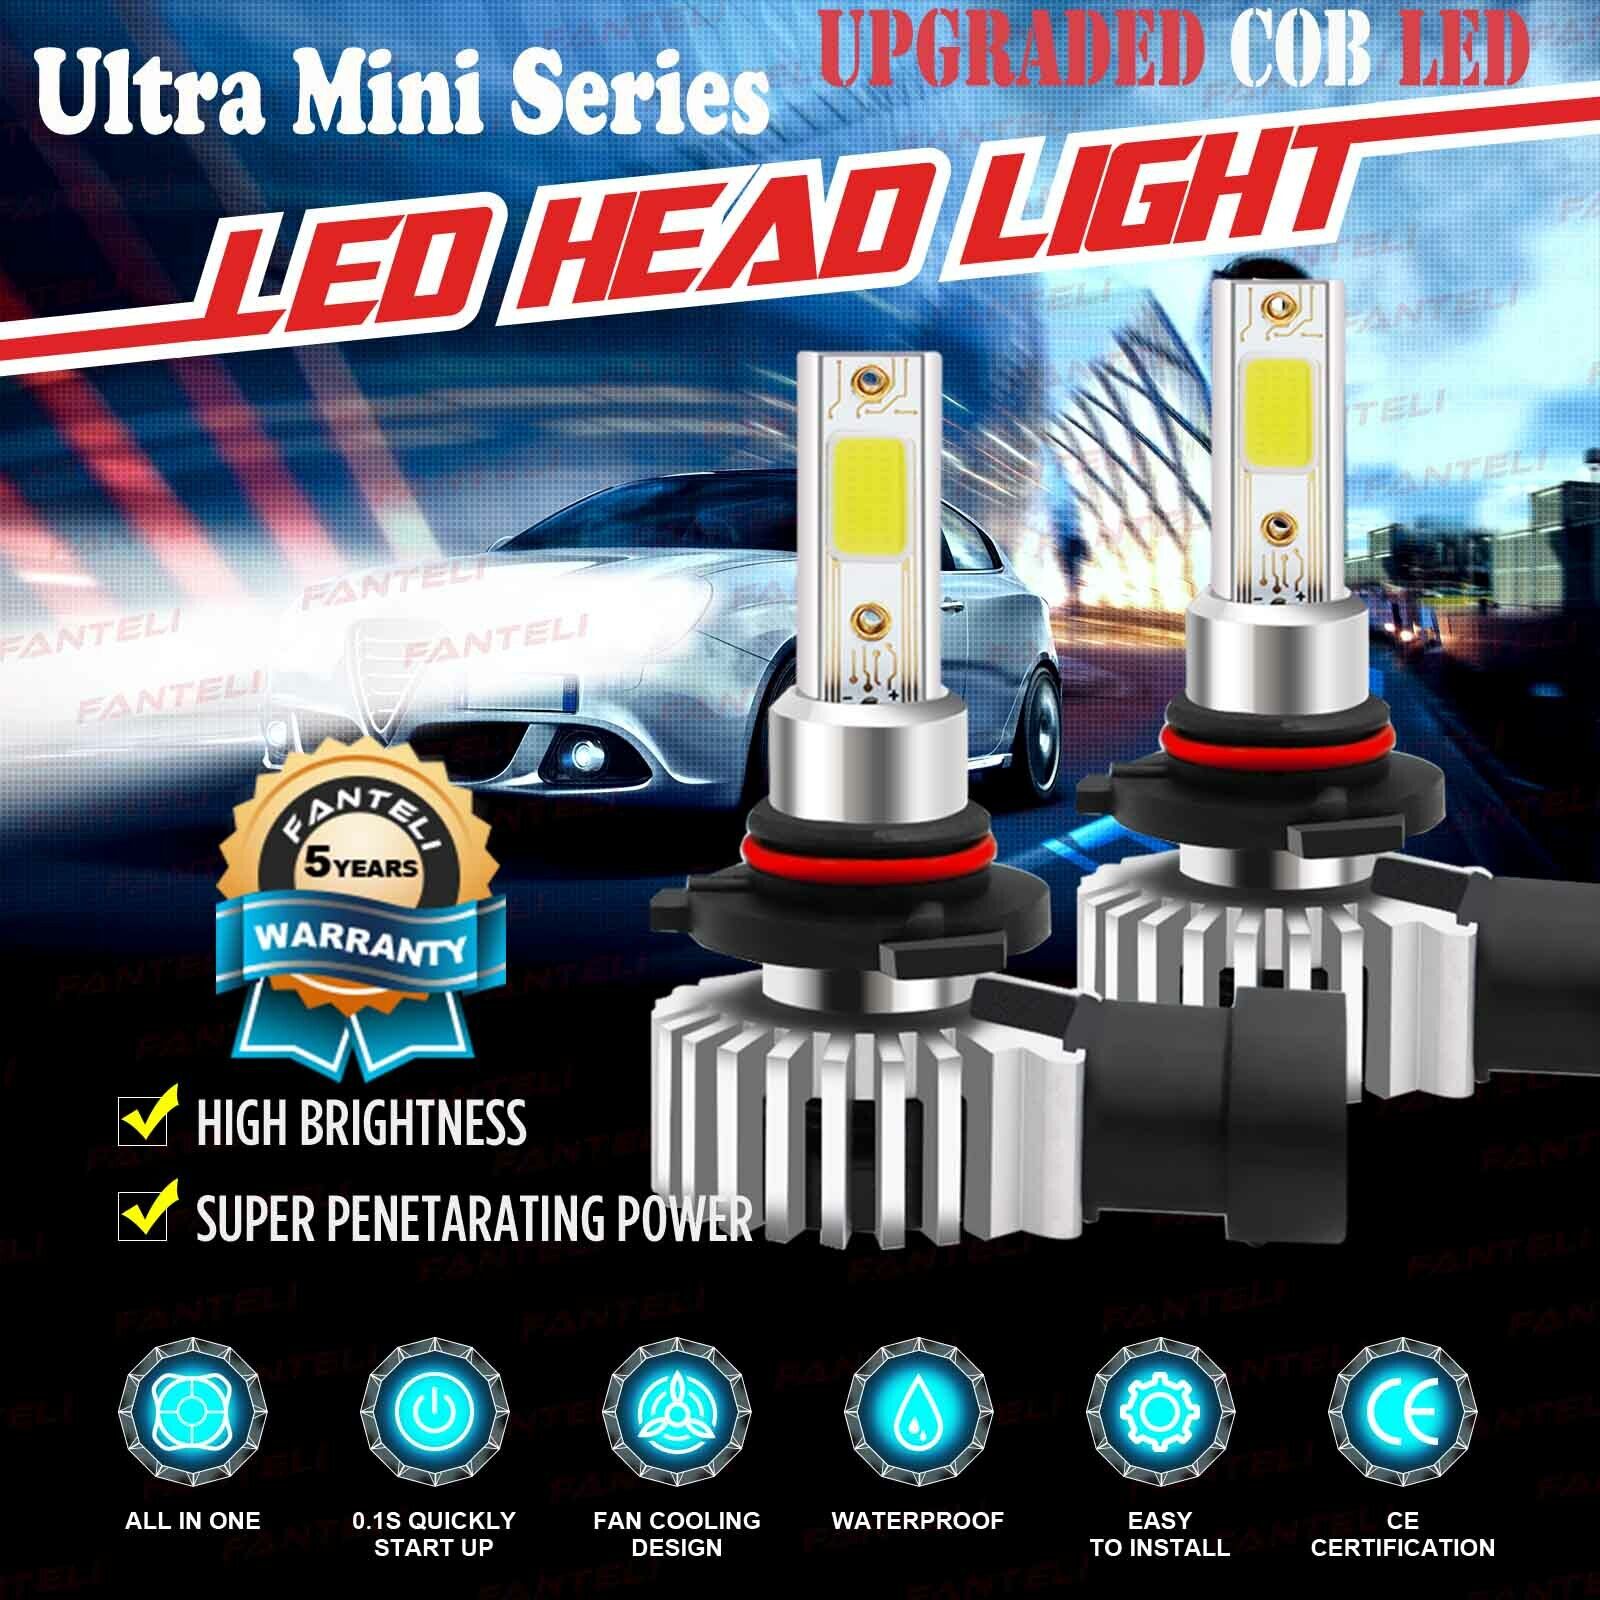 Cree LED Headlight Kit 9005 HB3 H10 9140 9145 2350W 6000K 352500LM Bulbs Pair